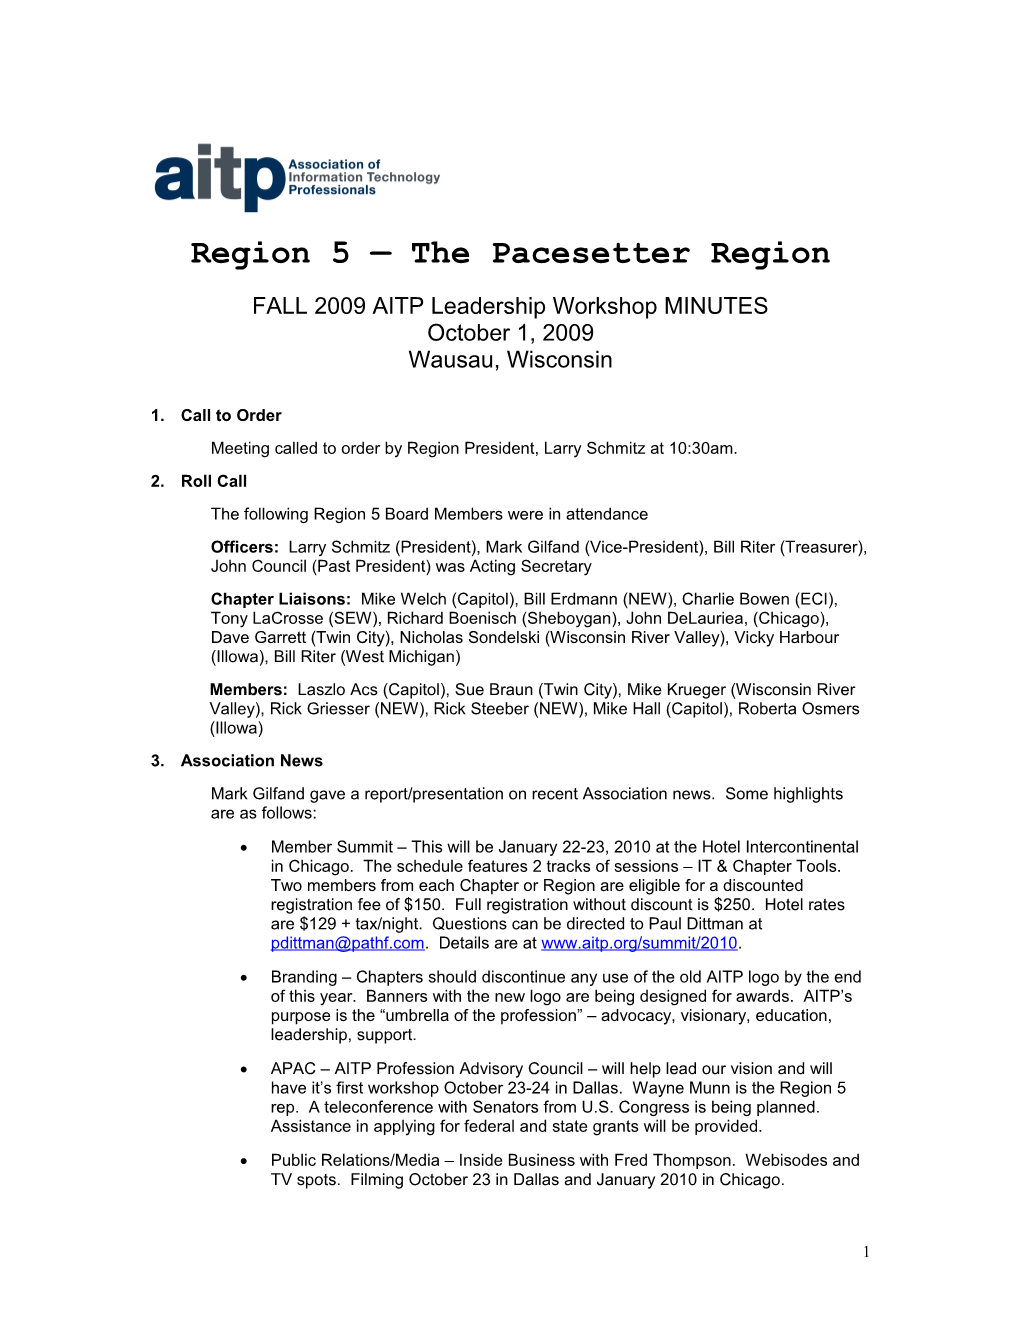 Region 5 the Pacesetter Region FALL 2009 AITP Leadership Workshop MINUTES